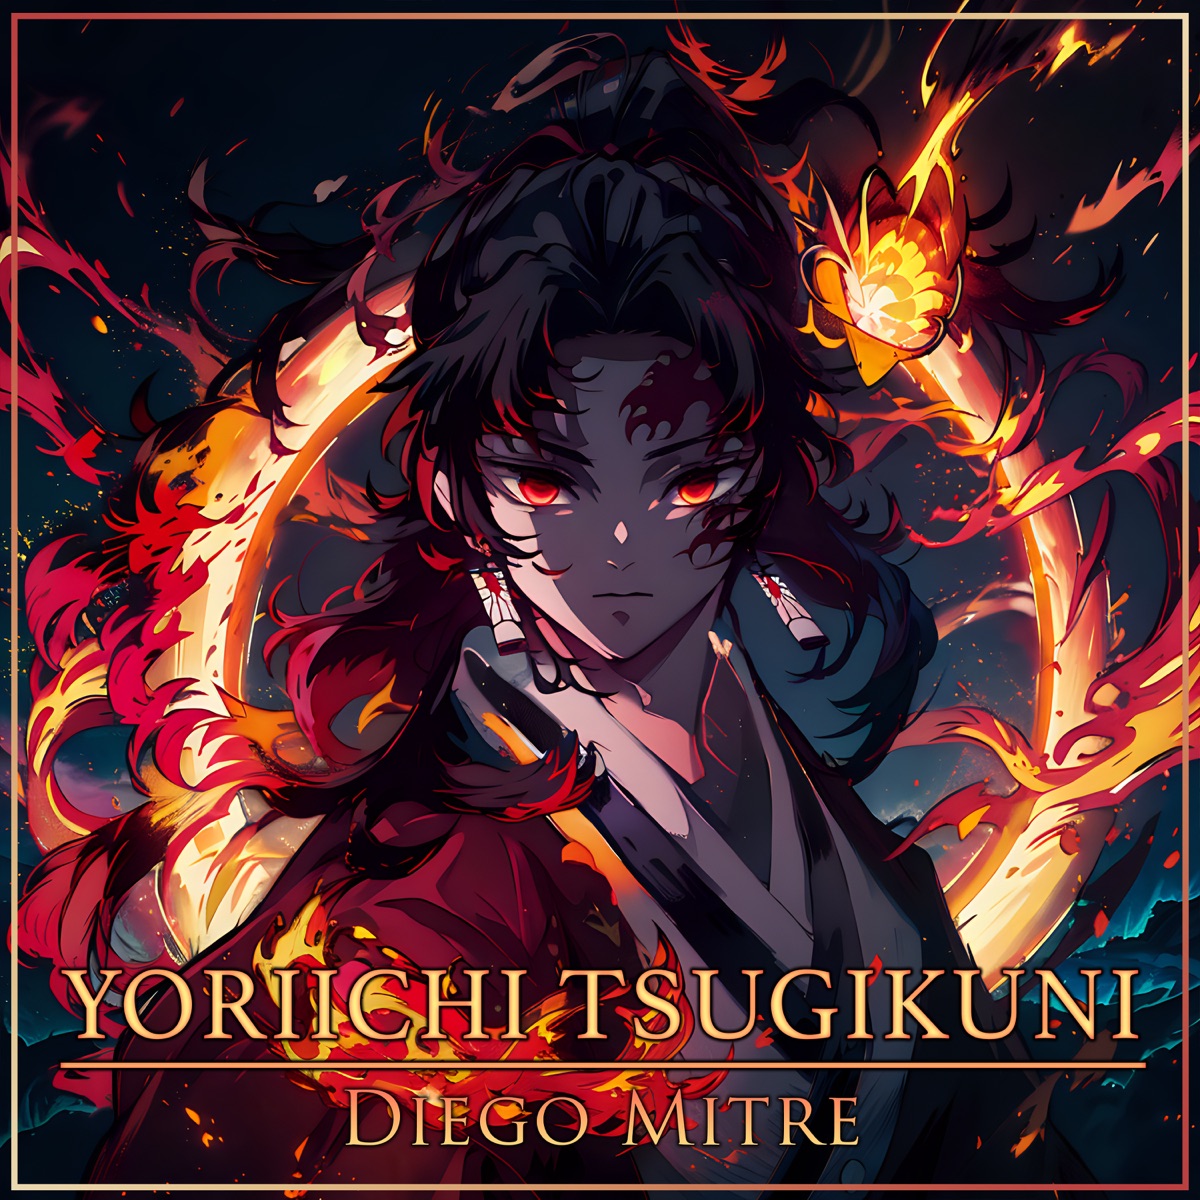 Yoriichi Tsugikuni (from Demon Slayer) [Cover] - Single - Album by Diego  Mitre - Apple Music